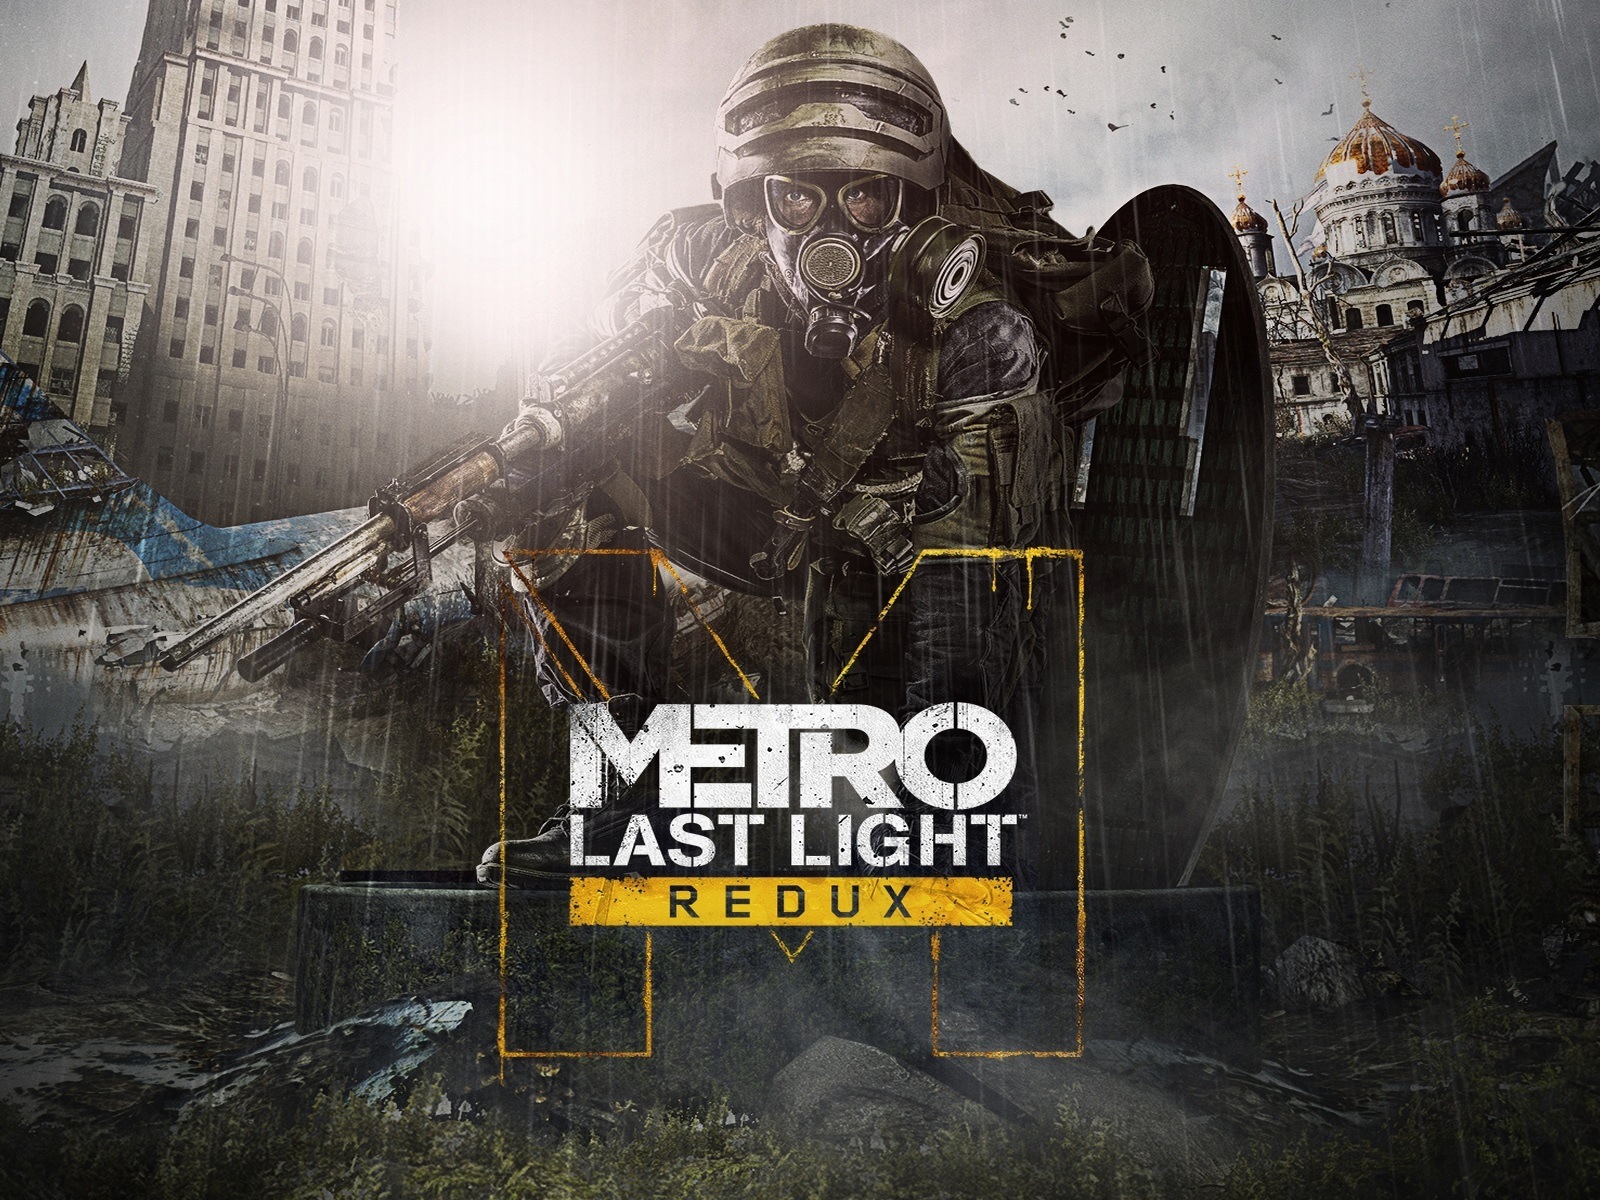 Metro 2033 Redux 地铁2033终极版 游戏壁纸10 - 1600x1200